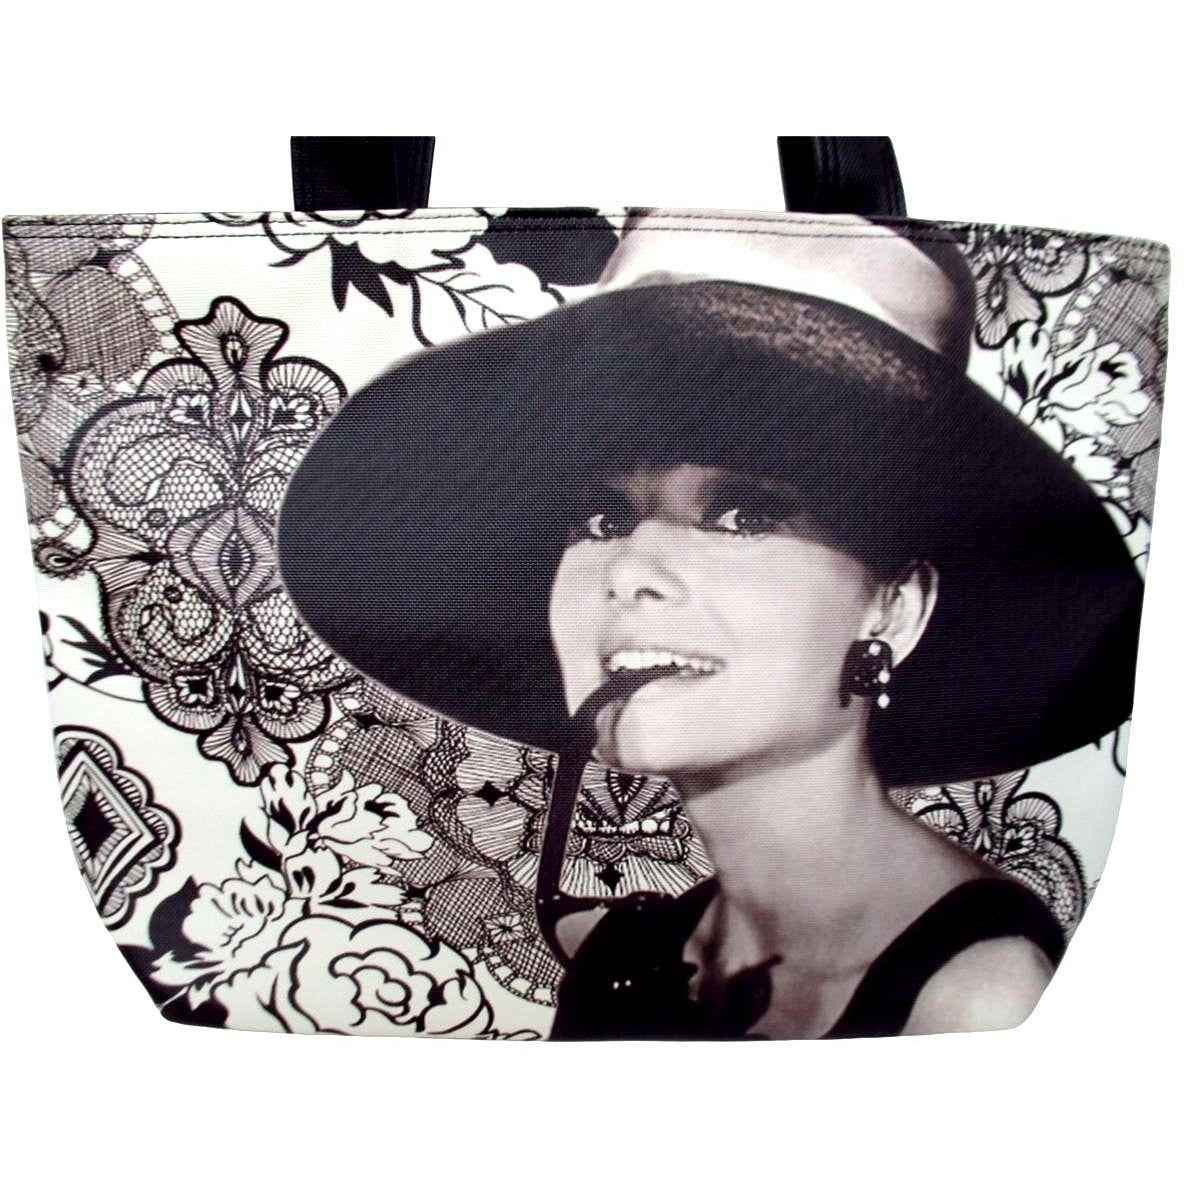 Bags, Nwot Audrey Hepburn Purse